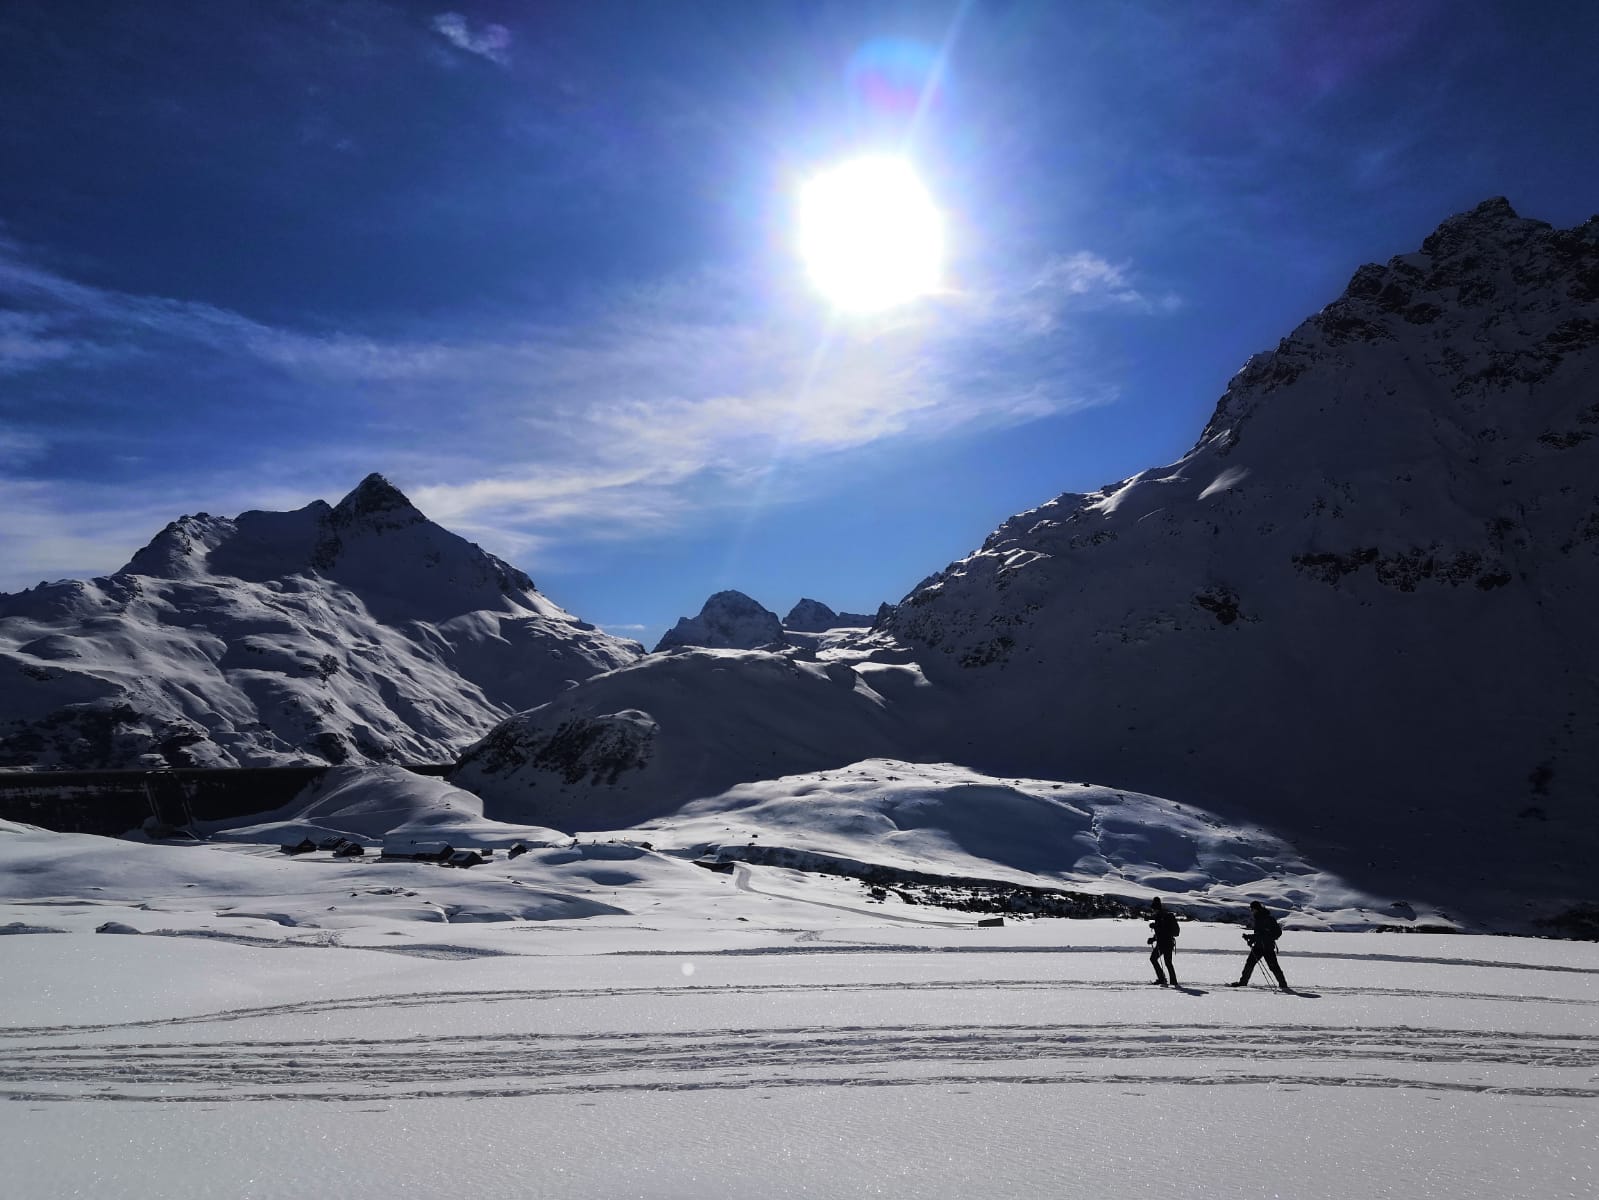 Schneeschuhwanderung zum Silvrettasee_ Panorama_(c) mateoundelena